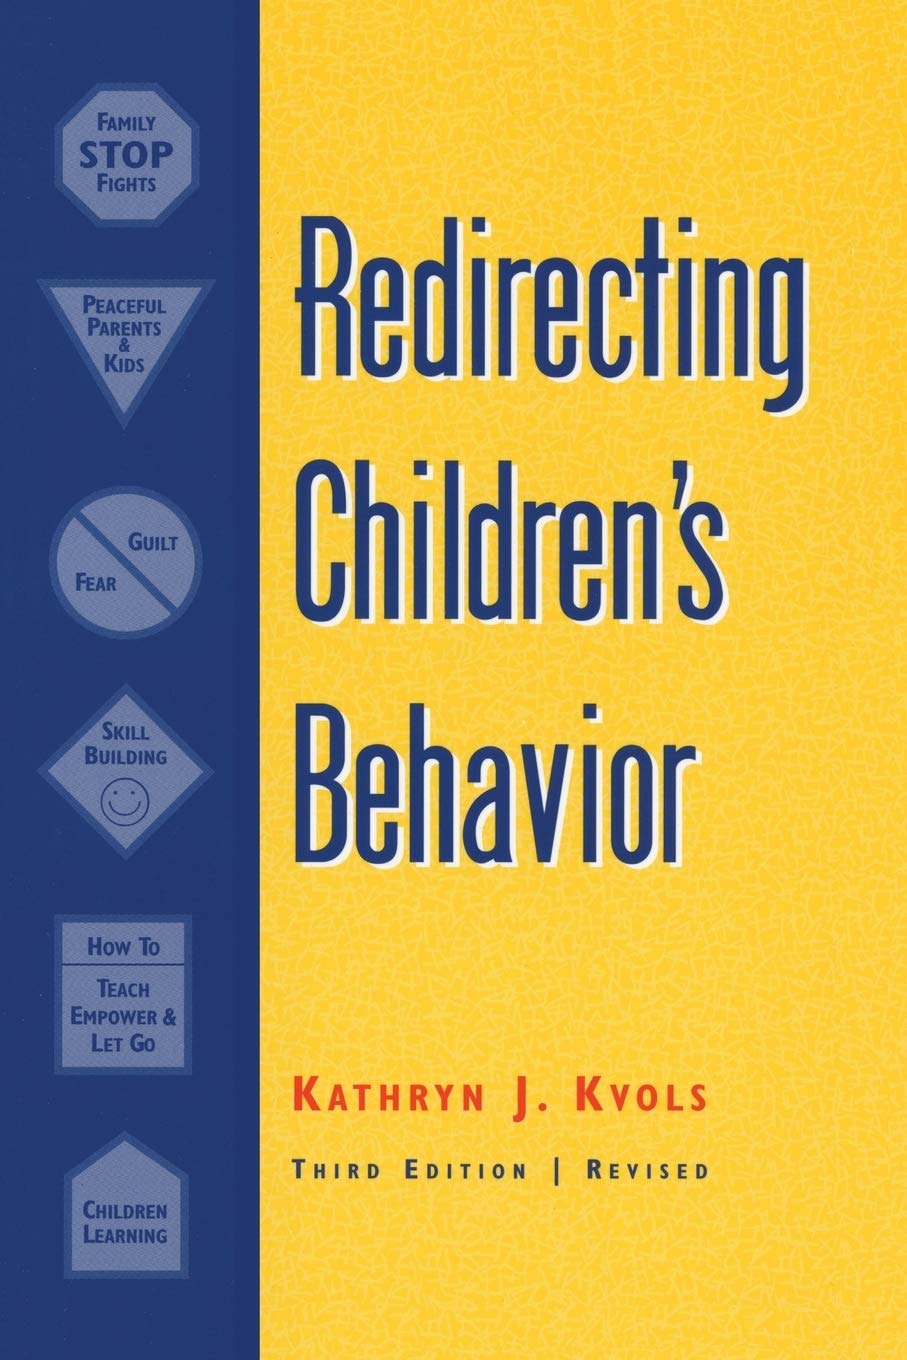 The cover of the book Redirecting Children's Behavior by Kathryn J. Kvols